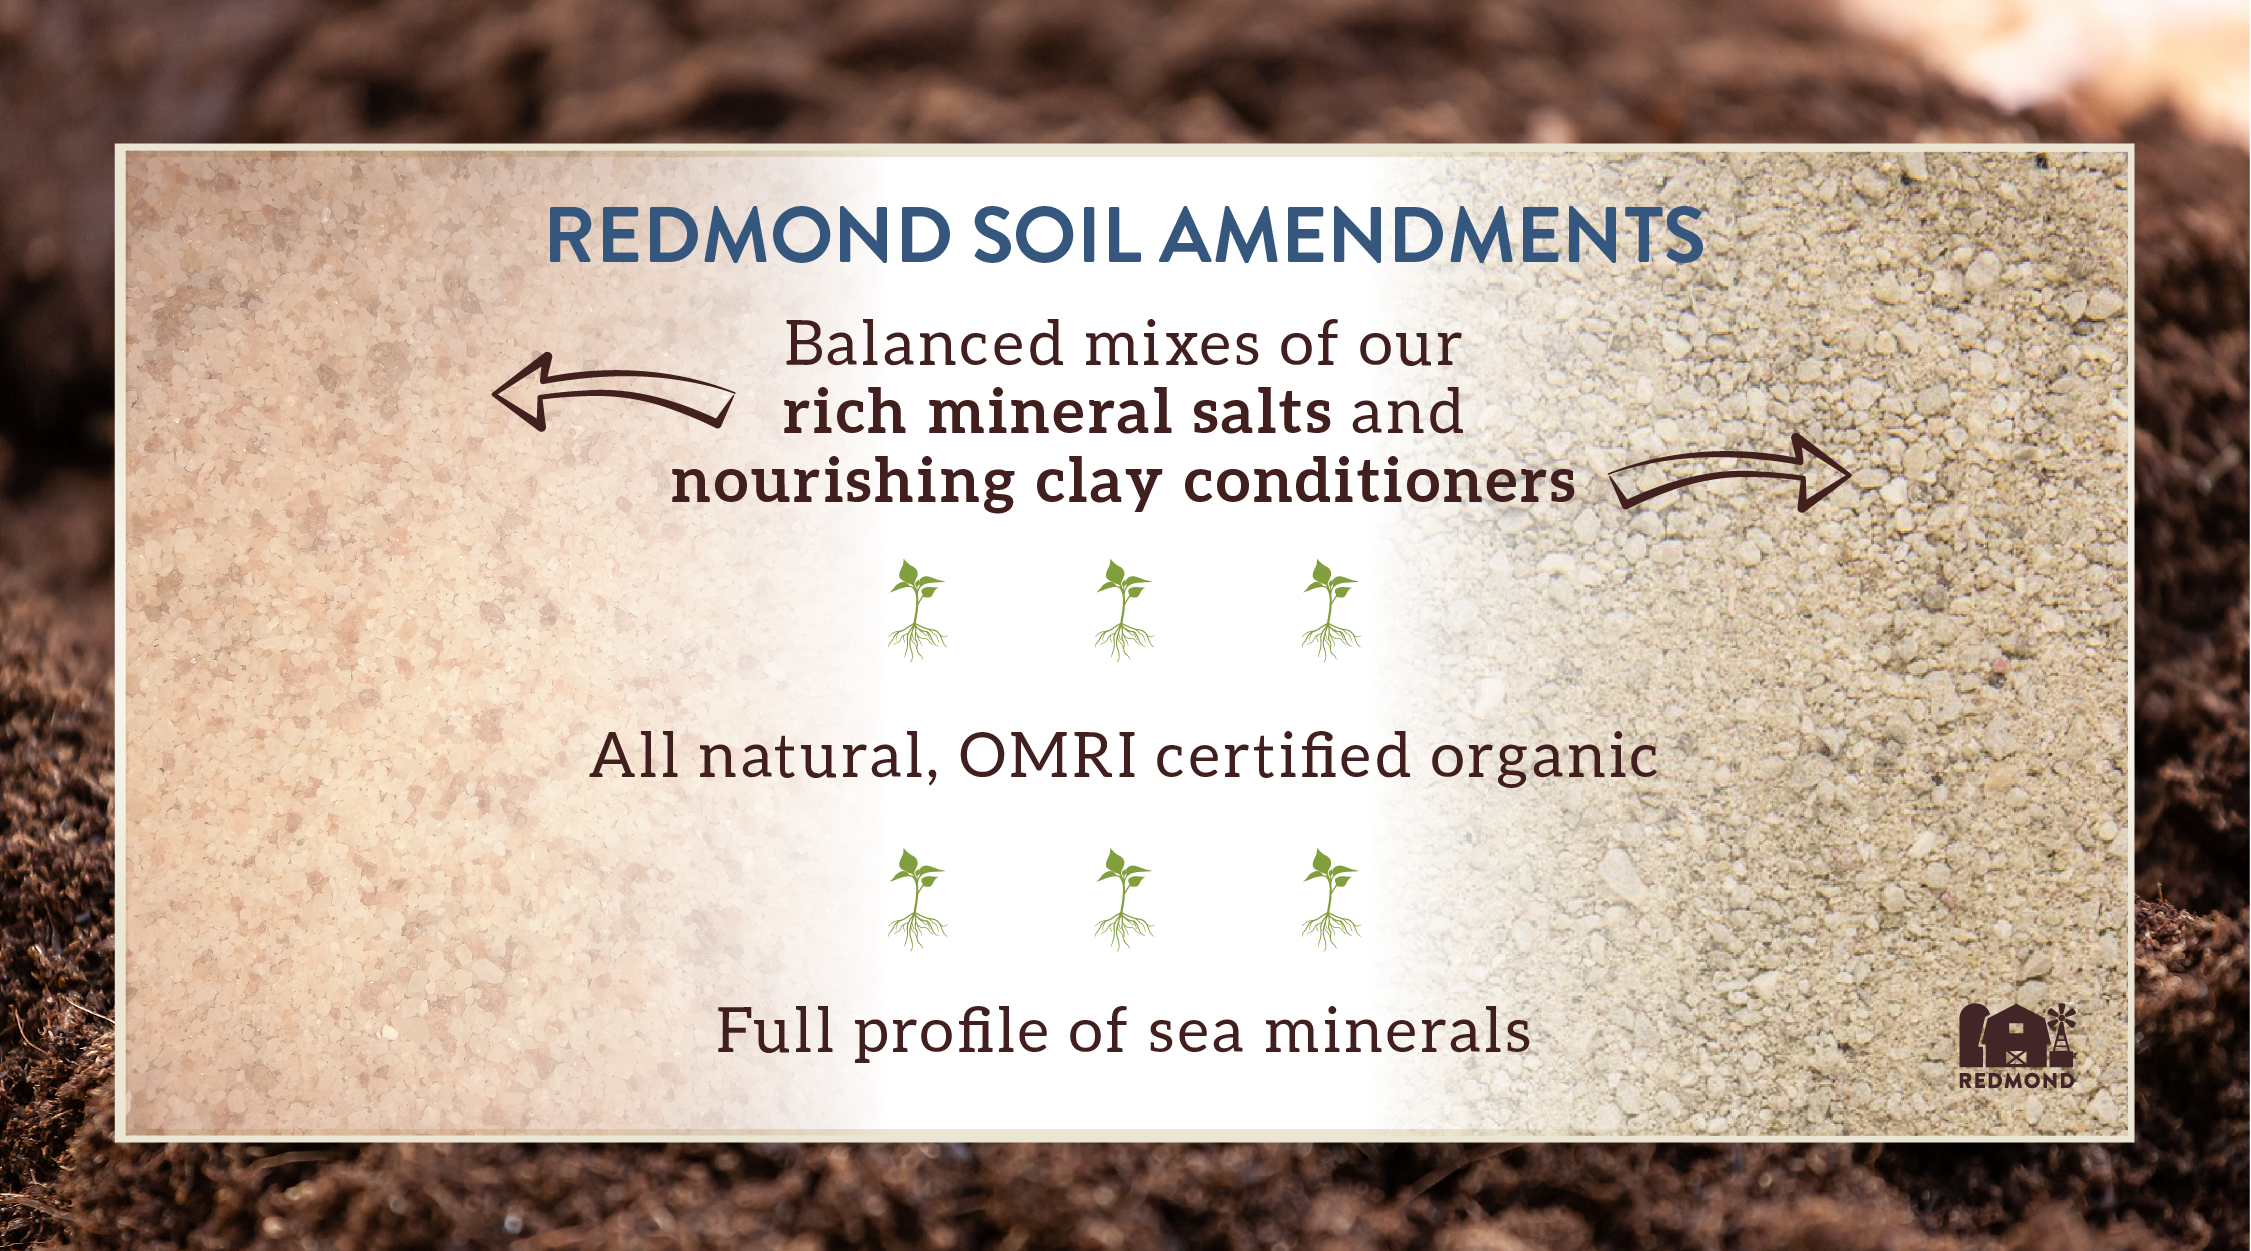 Redmond minerals soil amendments